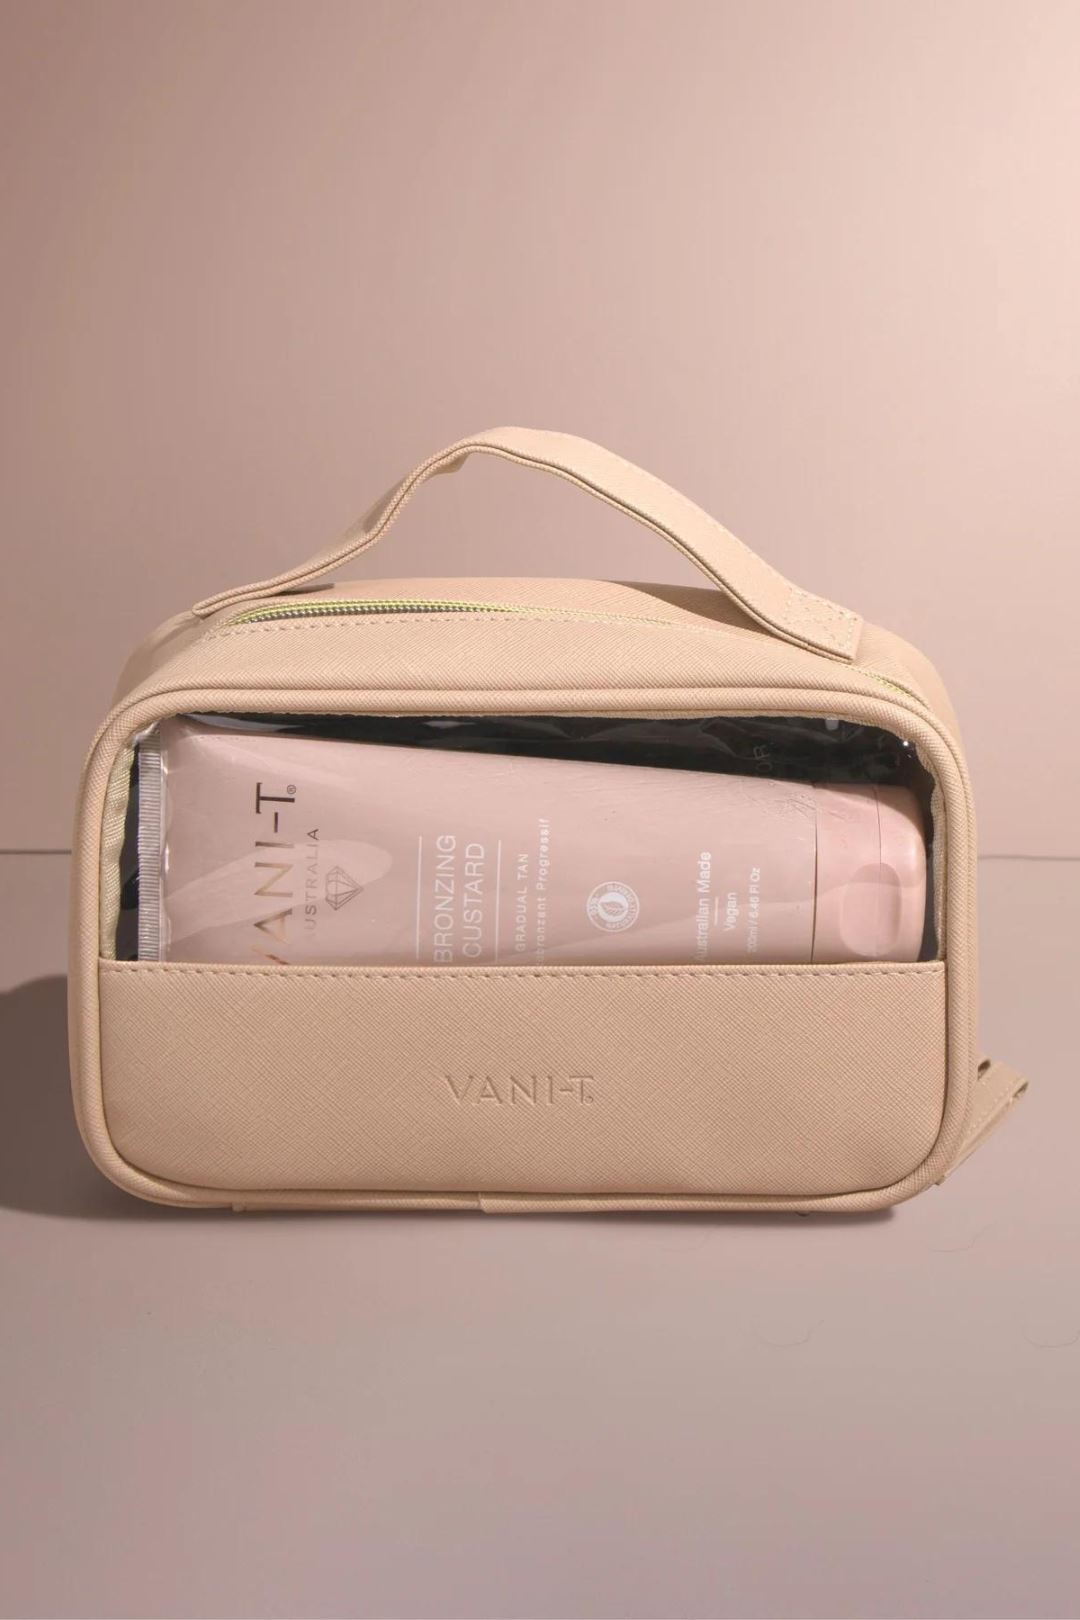 VANI-T Beauty Bag